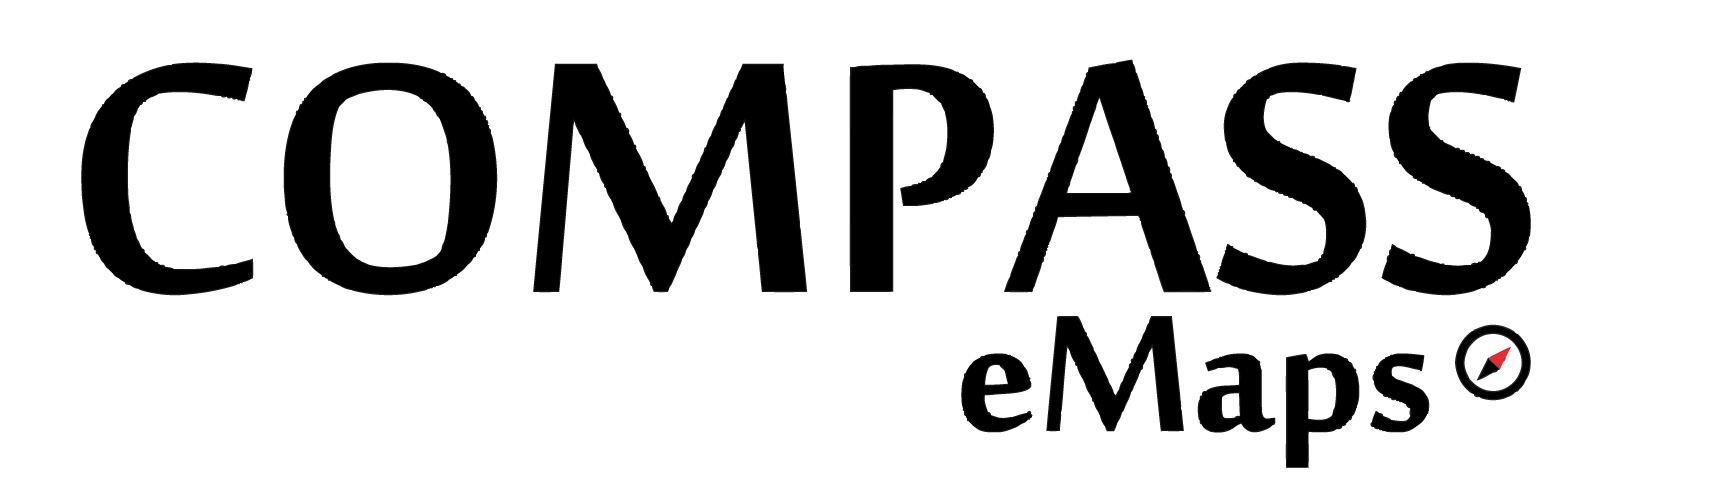 Compass eMaps